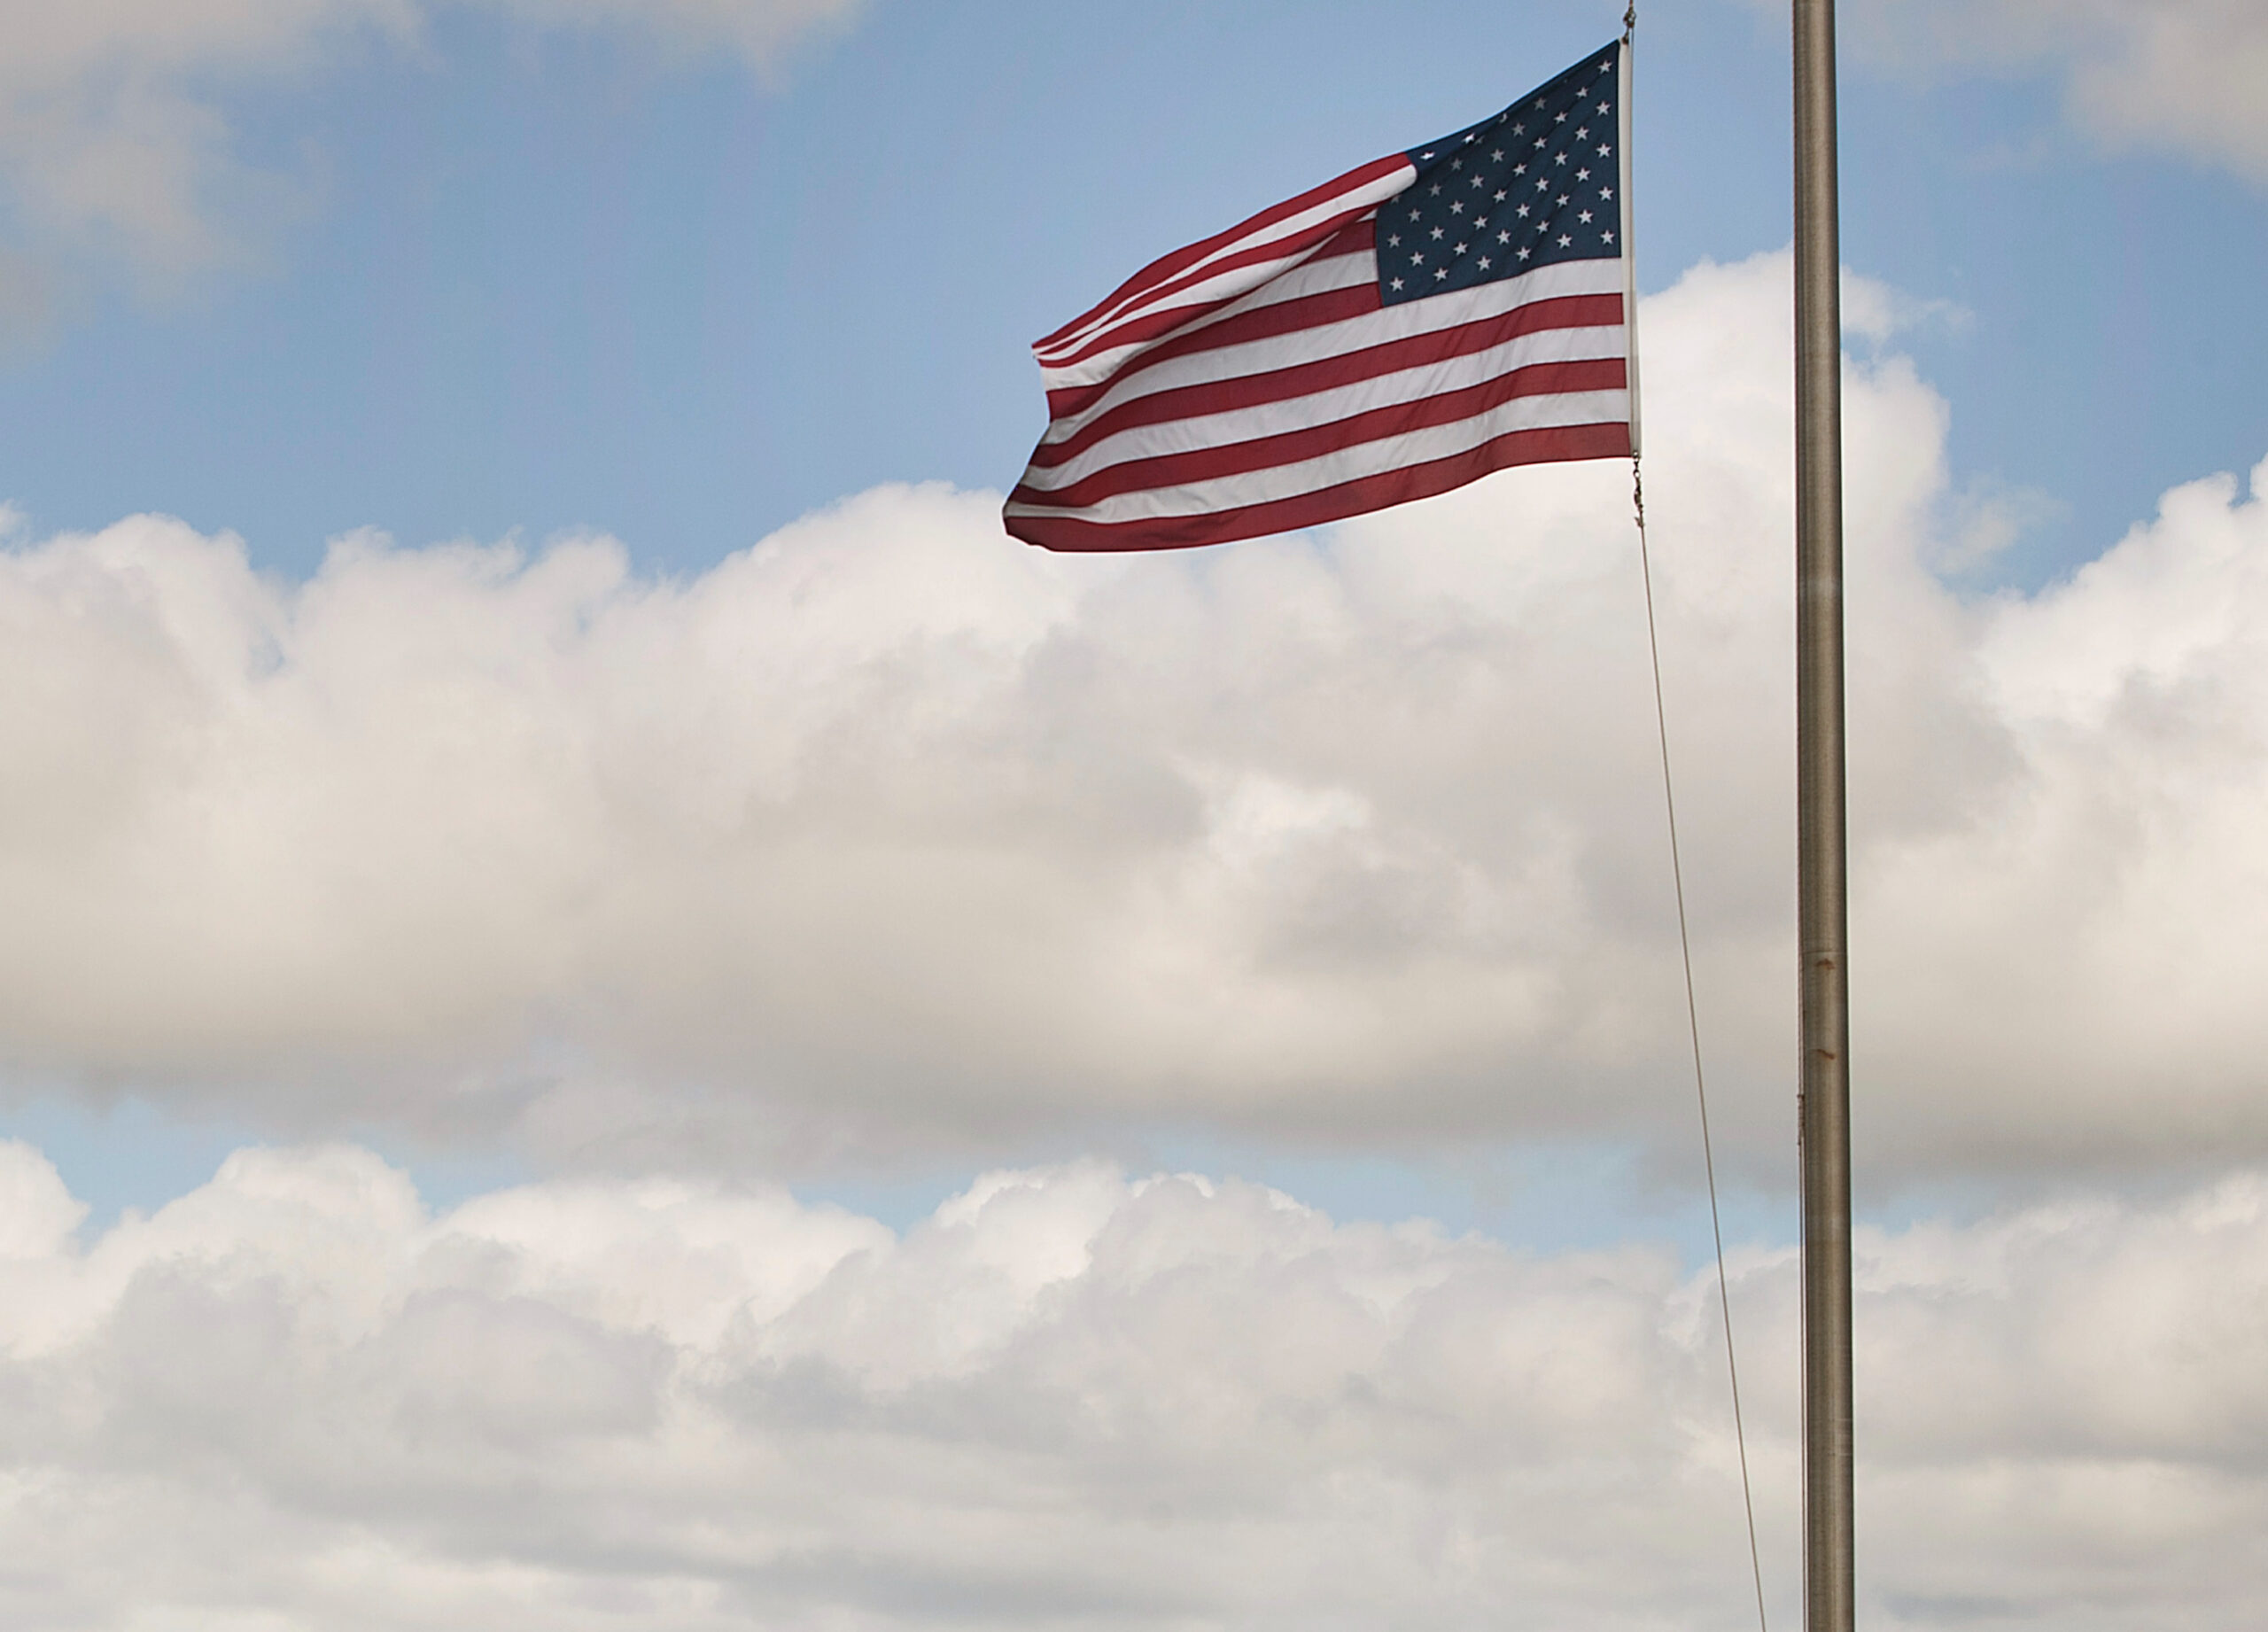 American flag in moderate breeze - remembering Pearl Harbor